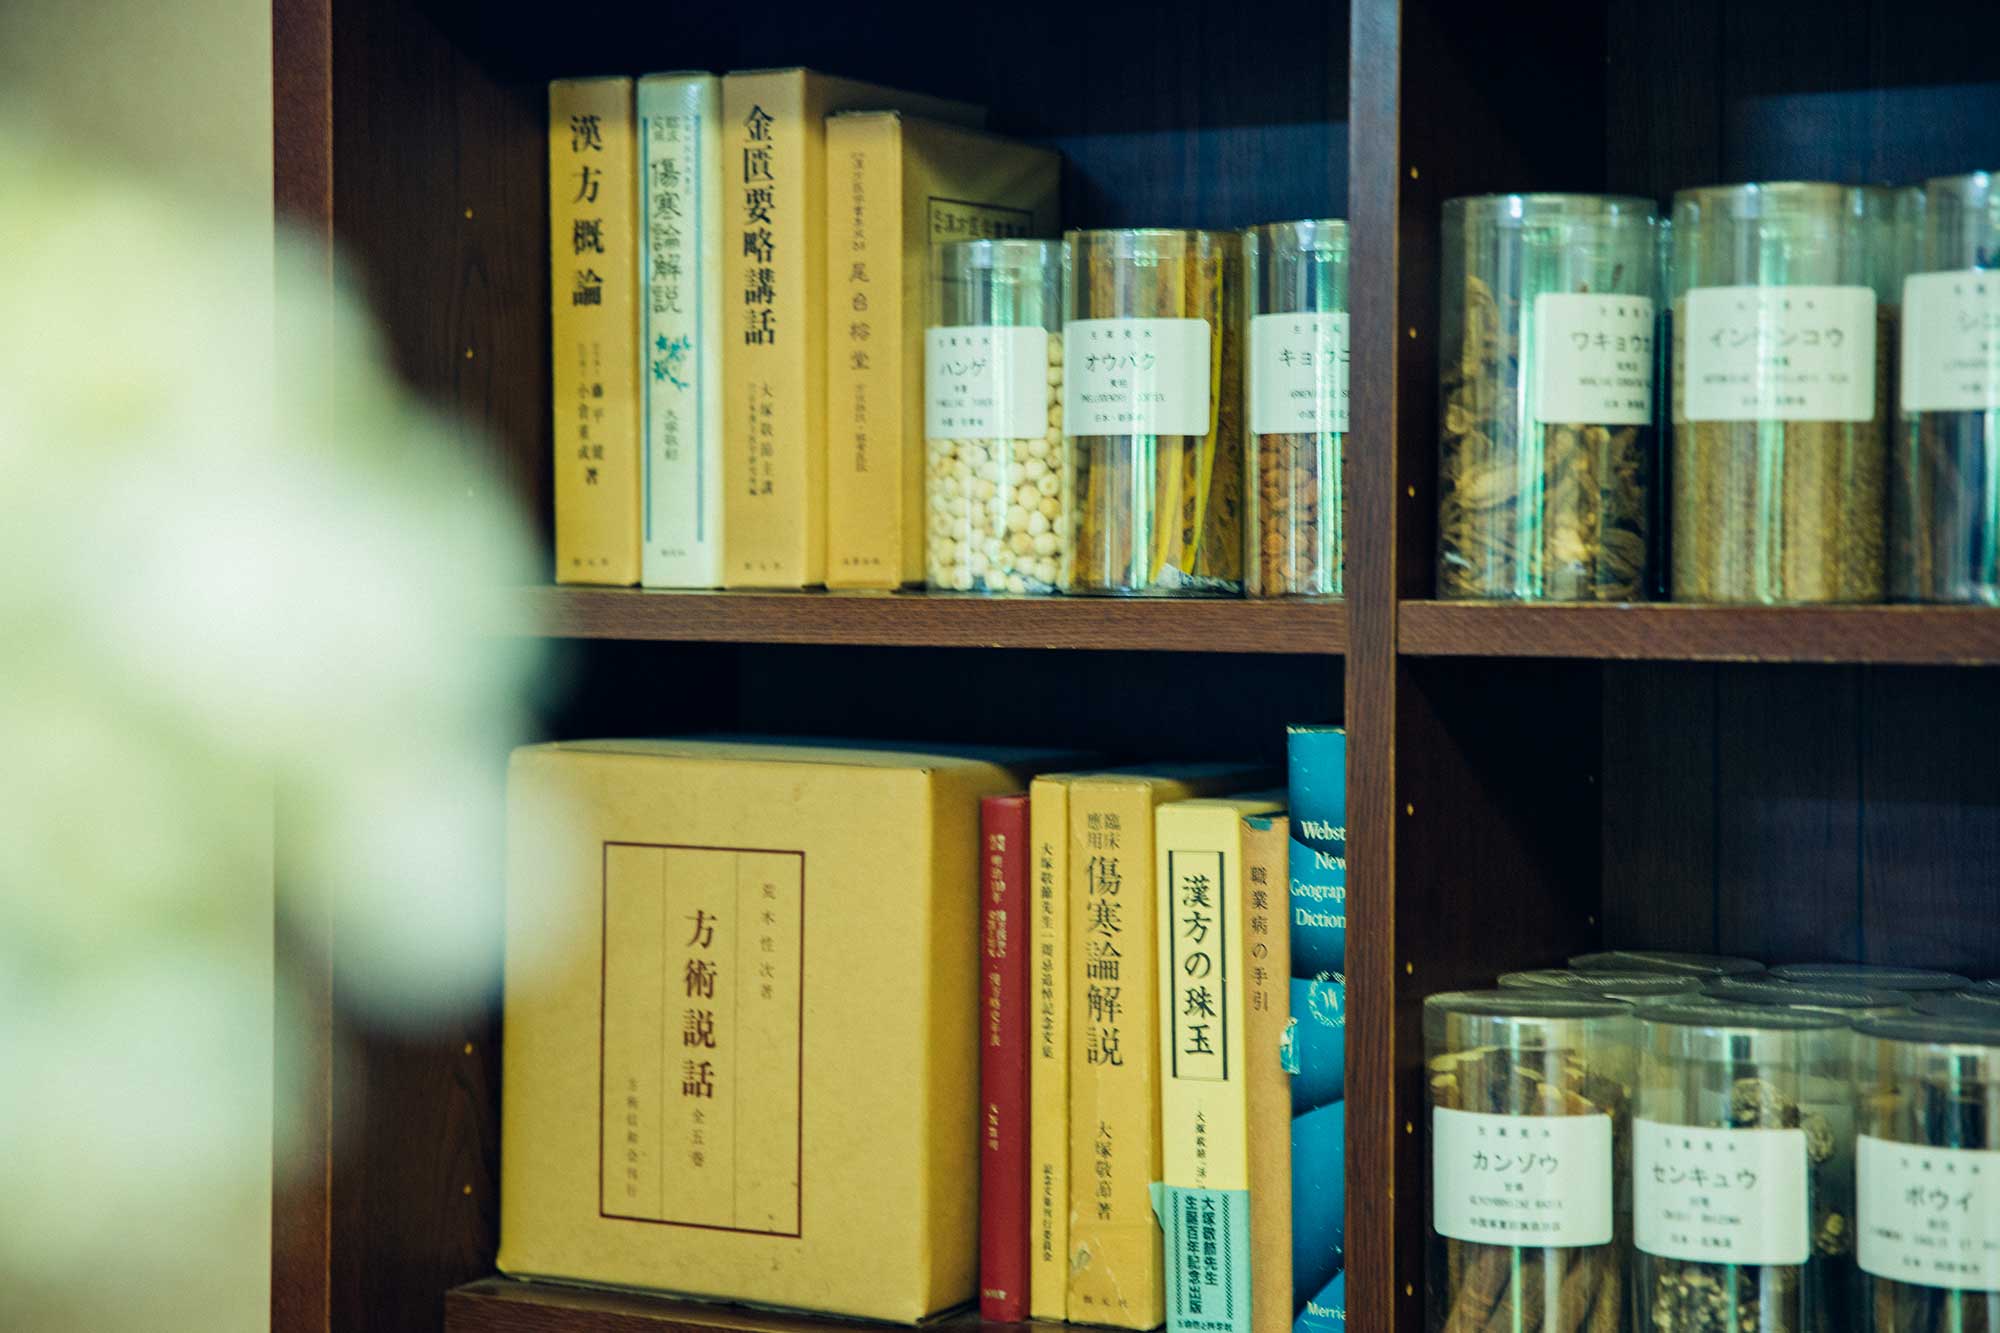 A shelf with medicine and books